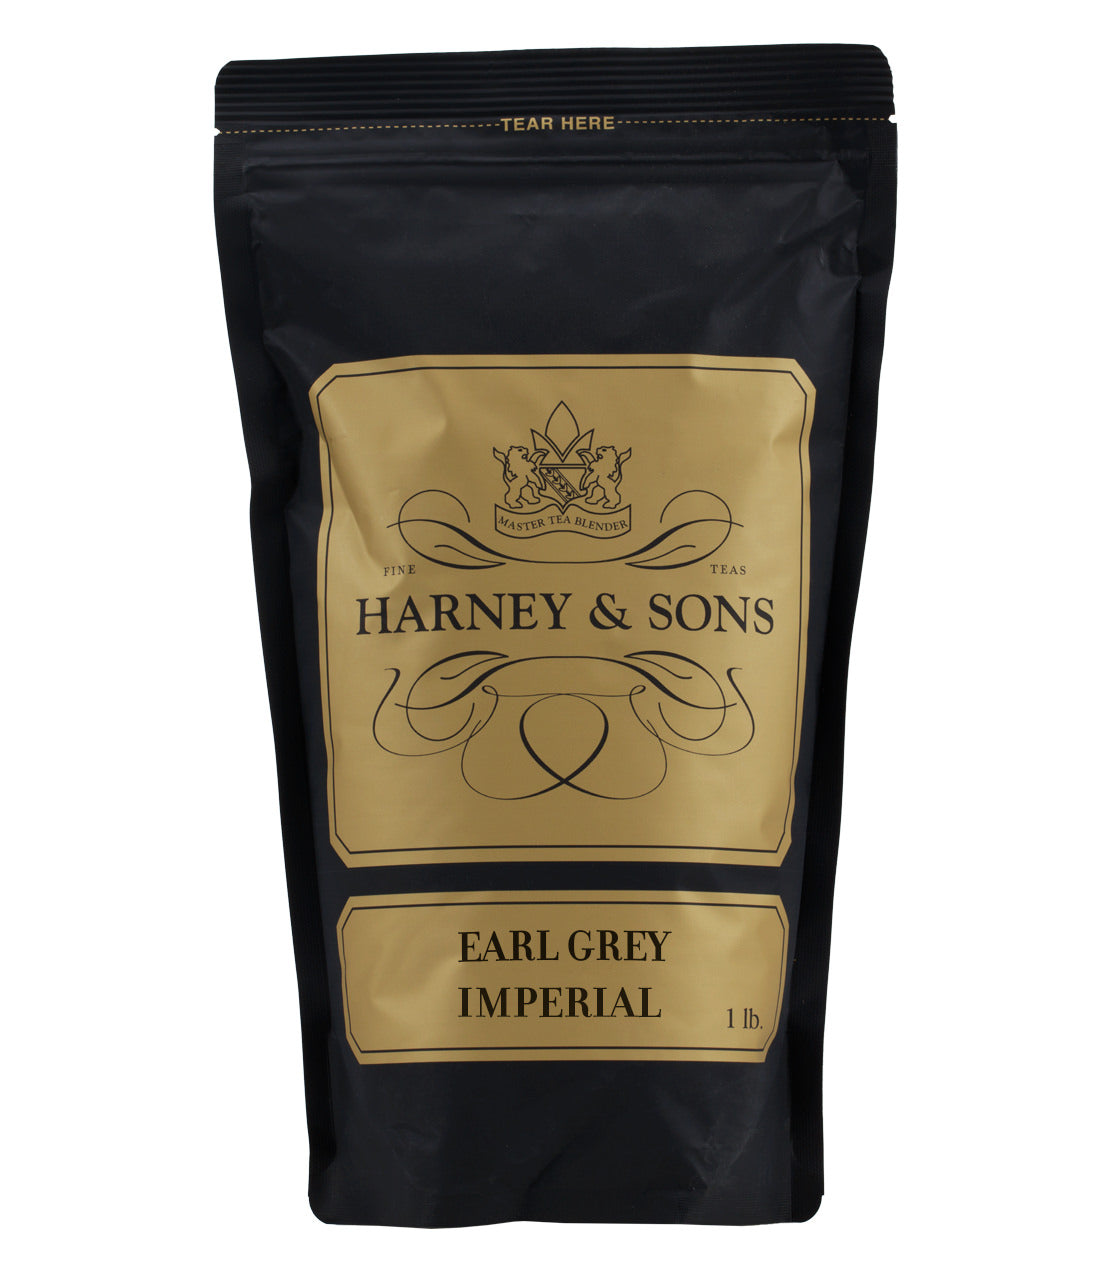 Earl Grey Imperial - Loose 1 lb. Bag - Harney & Sons Fine Teas